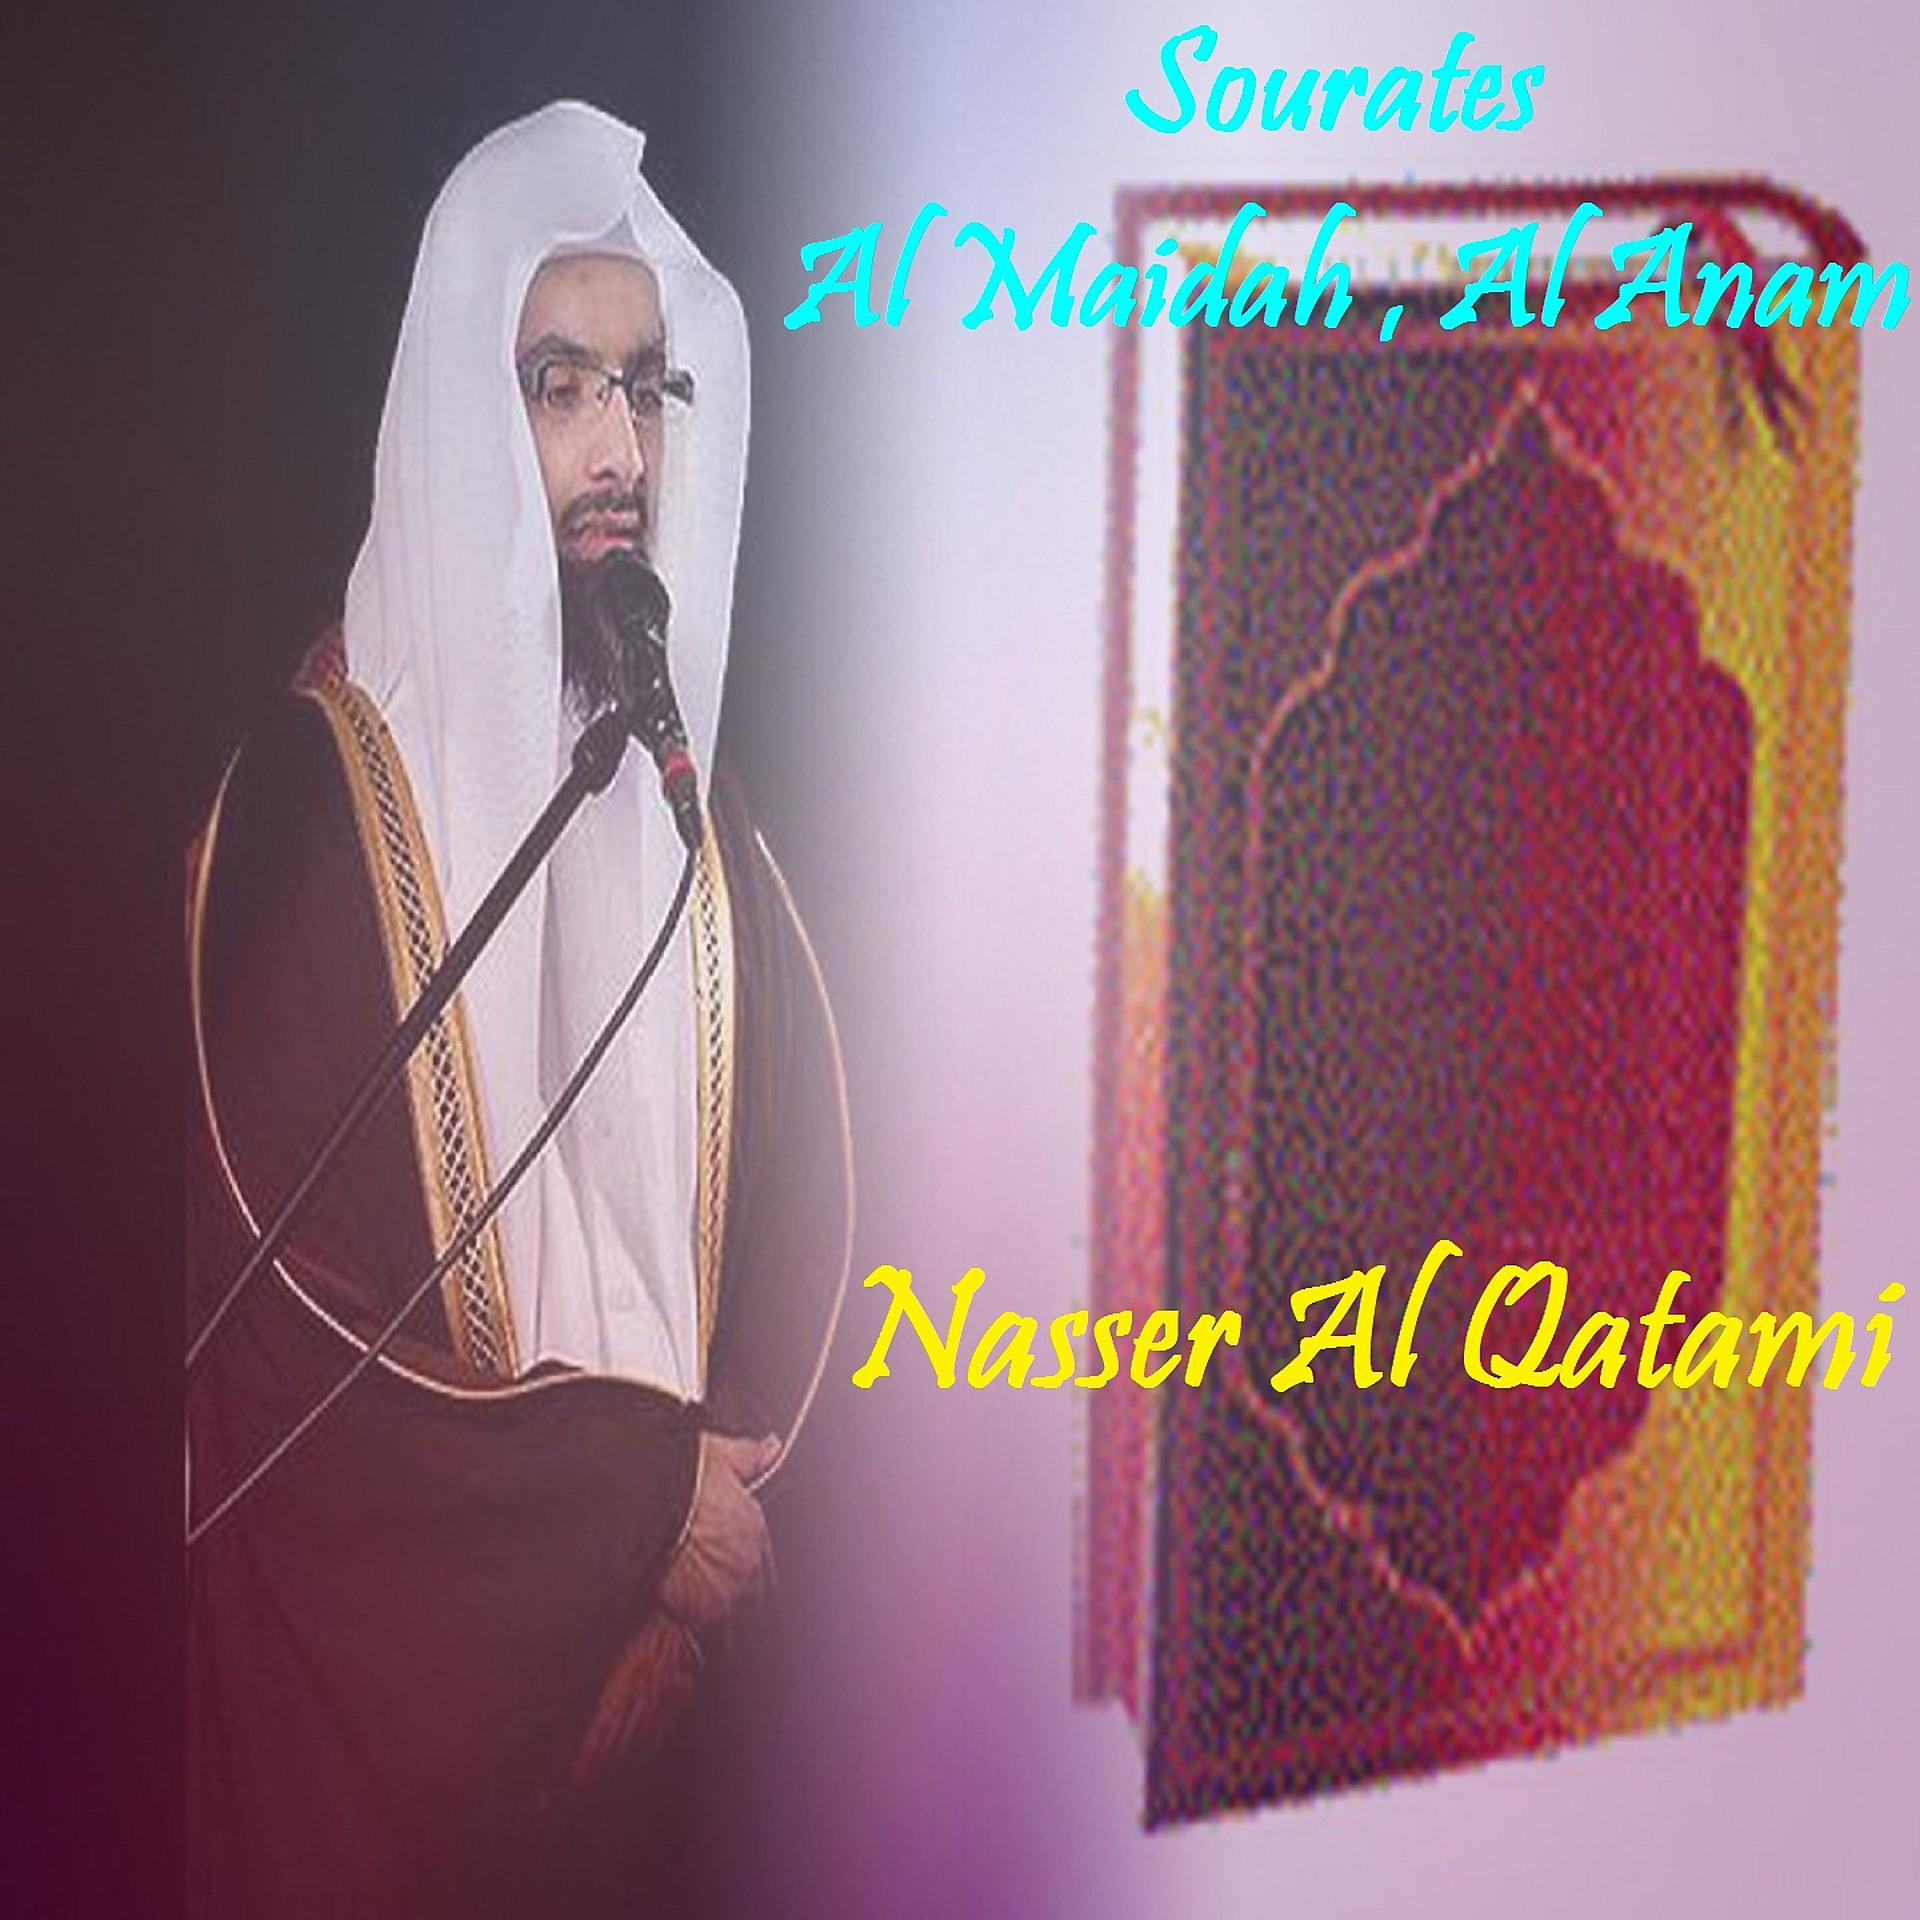 Постер альбома Sourates Al Maidah , Al Anam